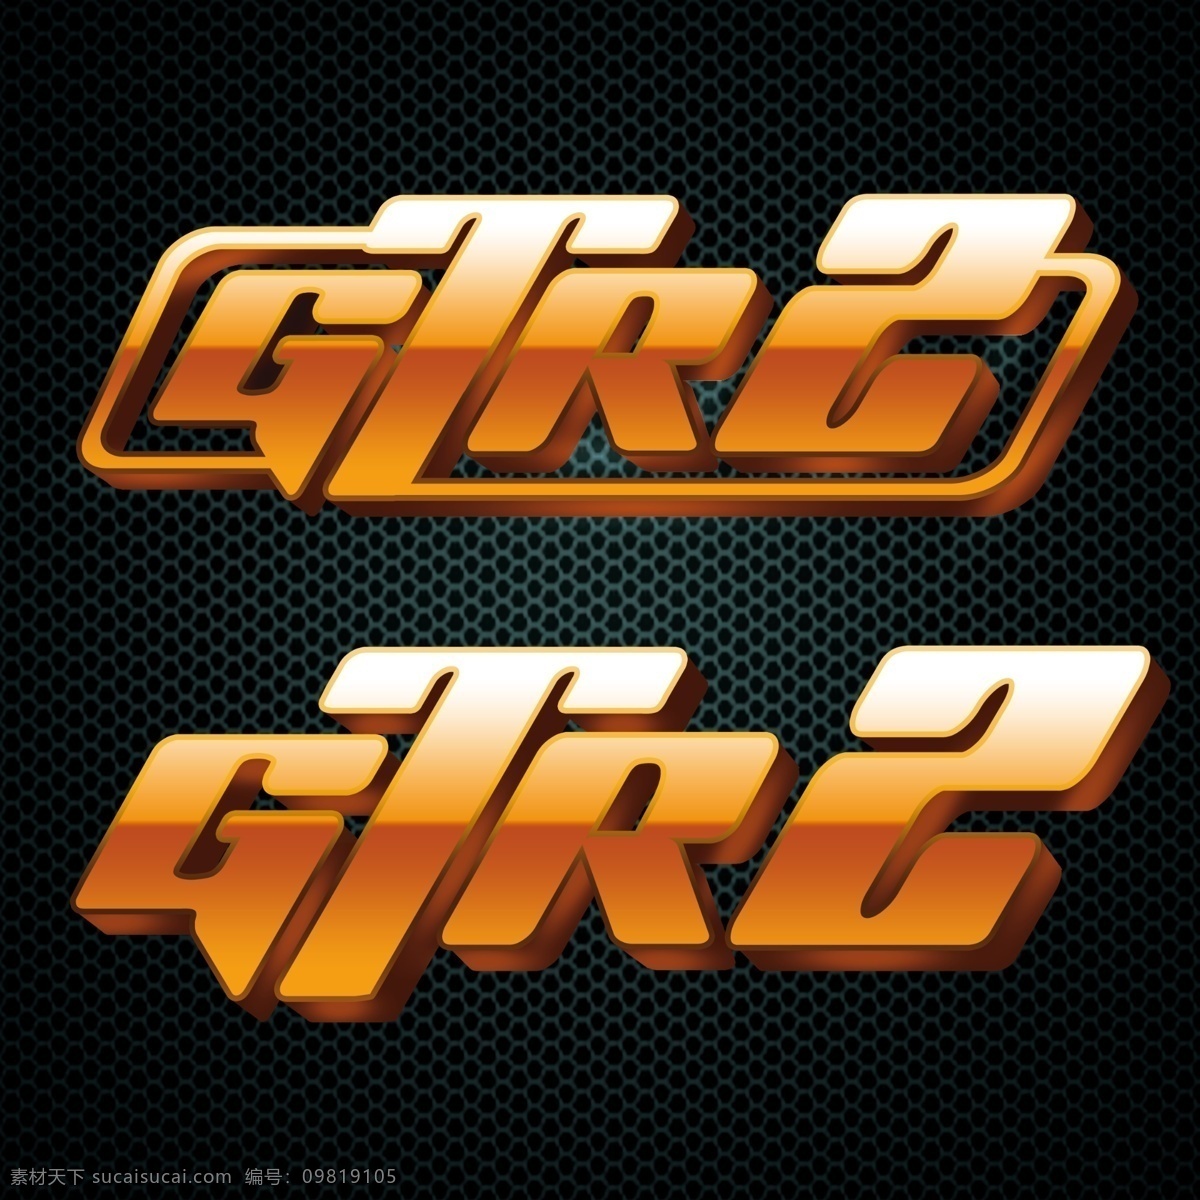 gtr logo设计 不锈钢 铁片 渐变 钢材质 字母g 字母t 字母r 标志